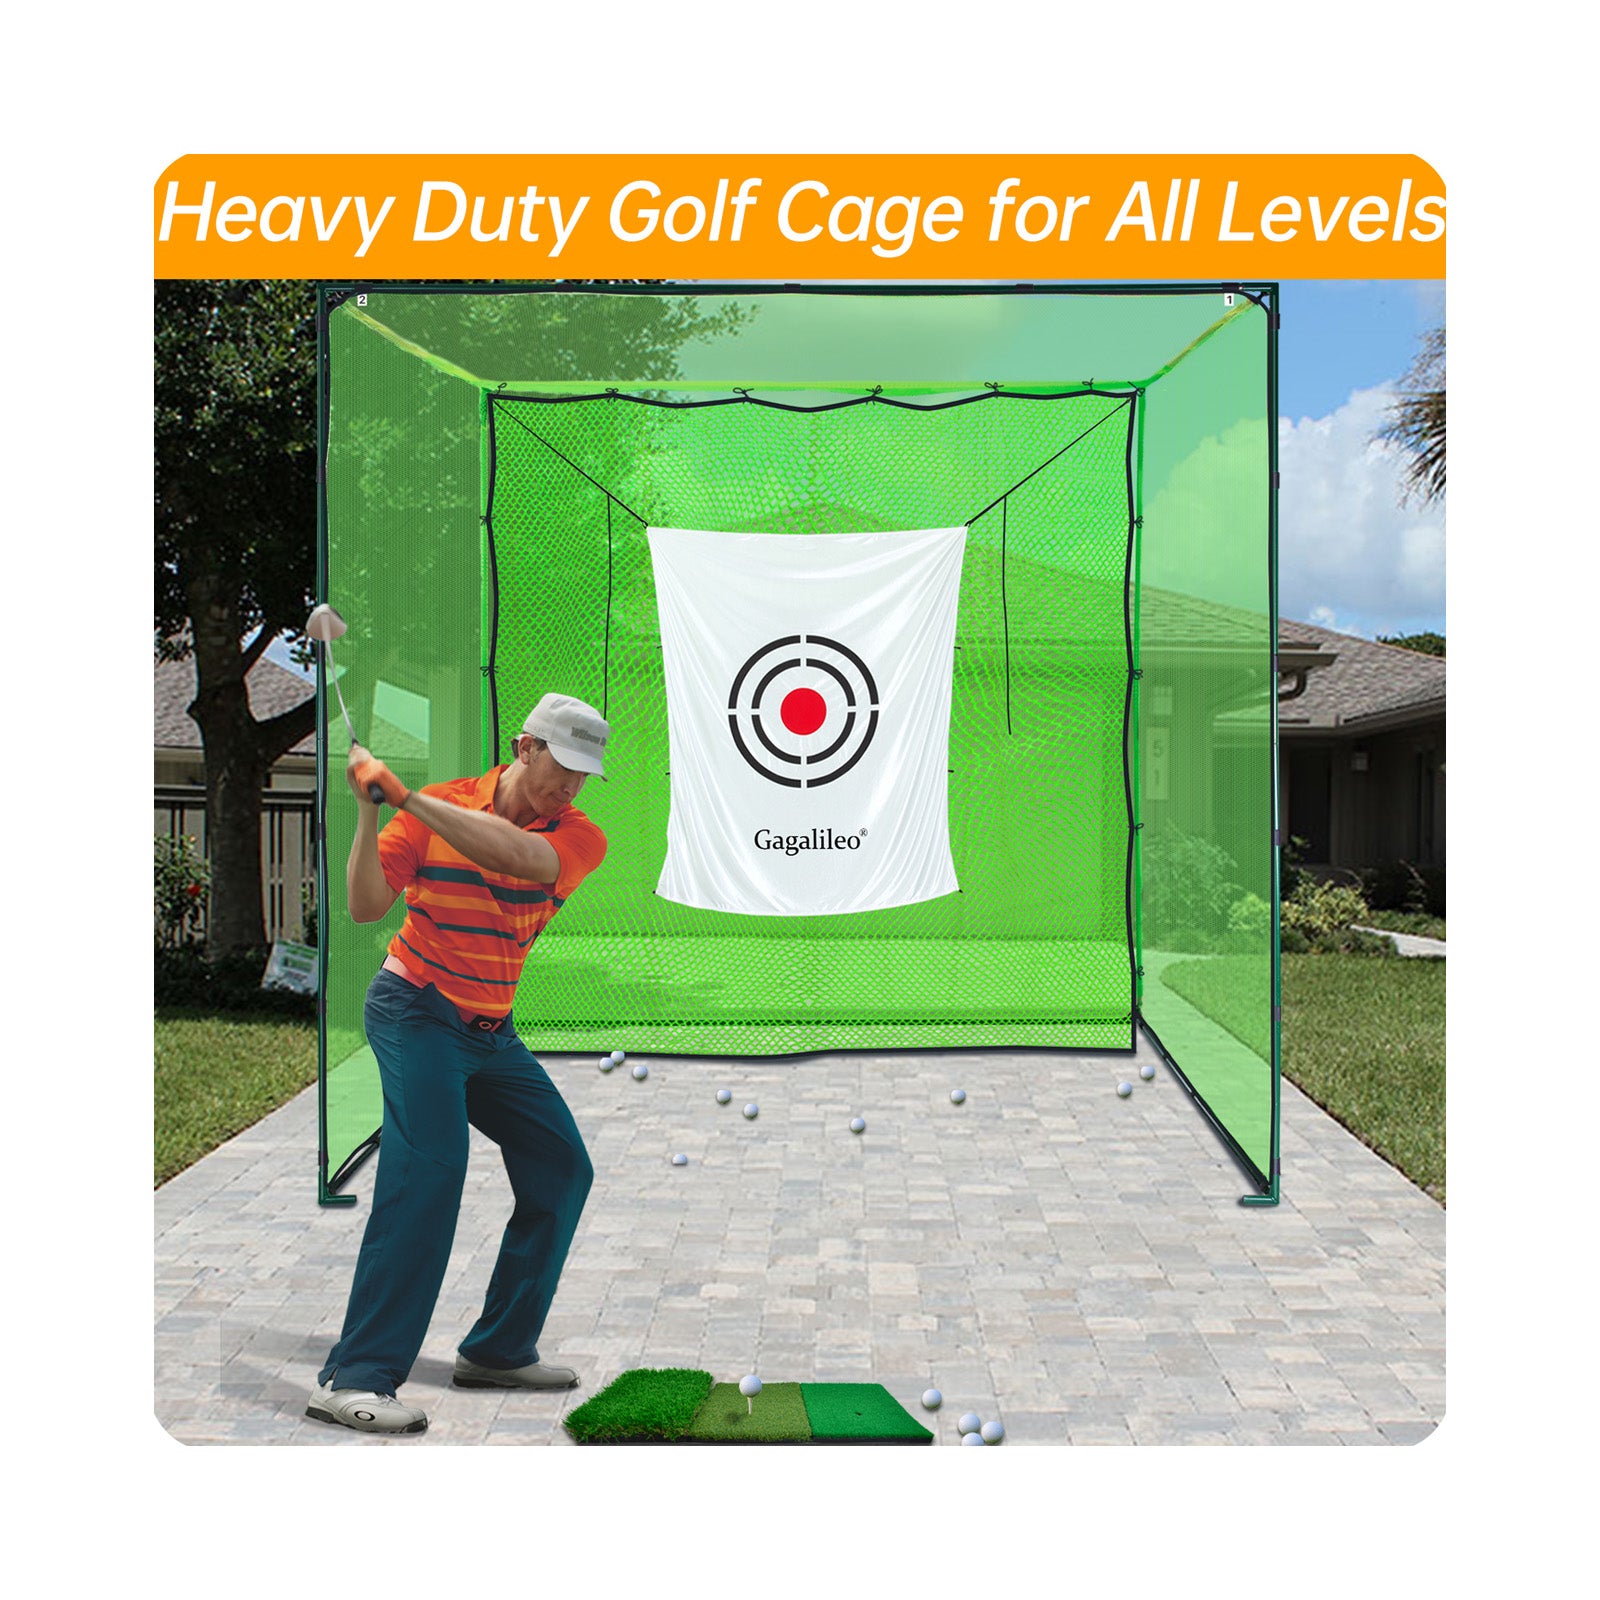 Jaula de red de golf Red de golf Jaula de golpeo de golf Práctica de golf Campo de prácticas |10'X 10'X 10' | deportes galileo